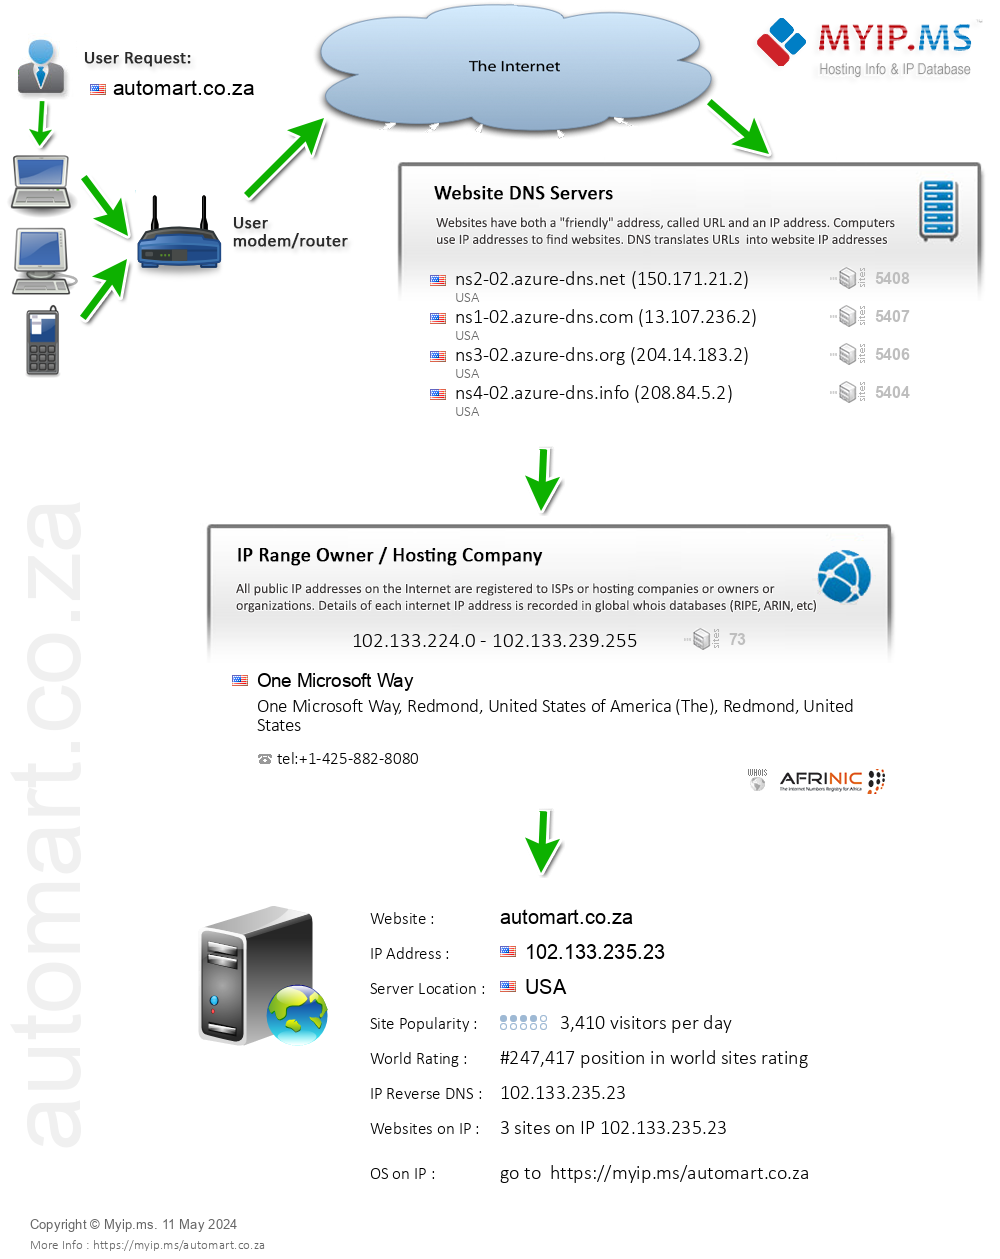 Automart.co.za - Website Hosting Visual IP Diagram